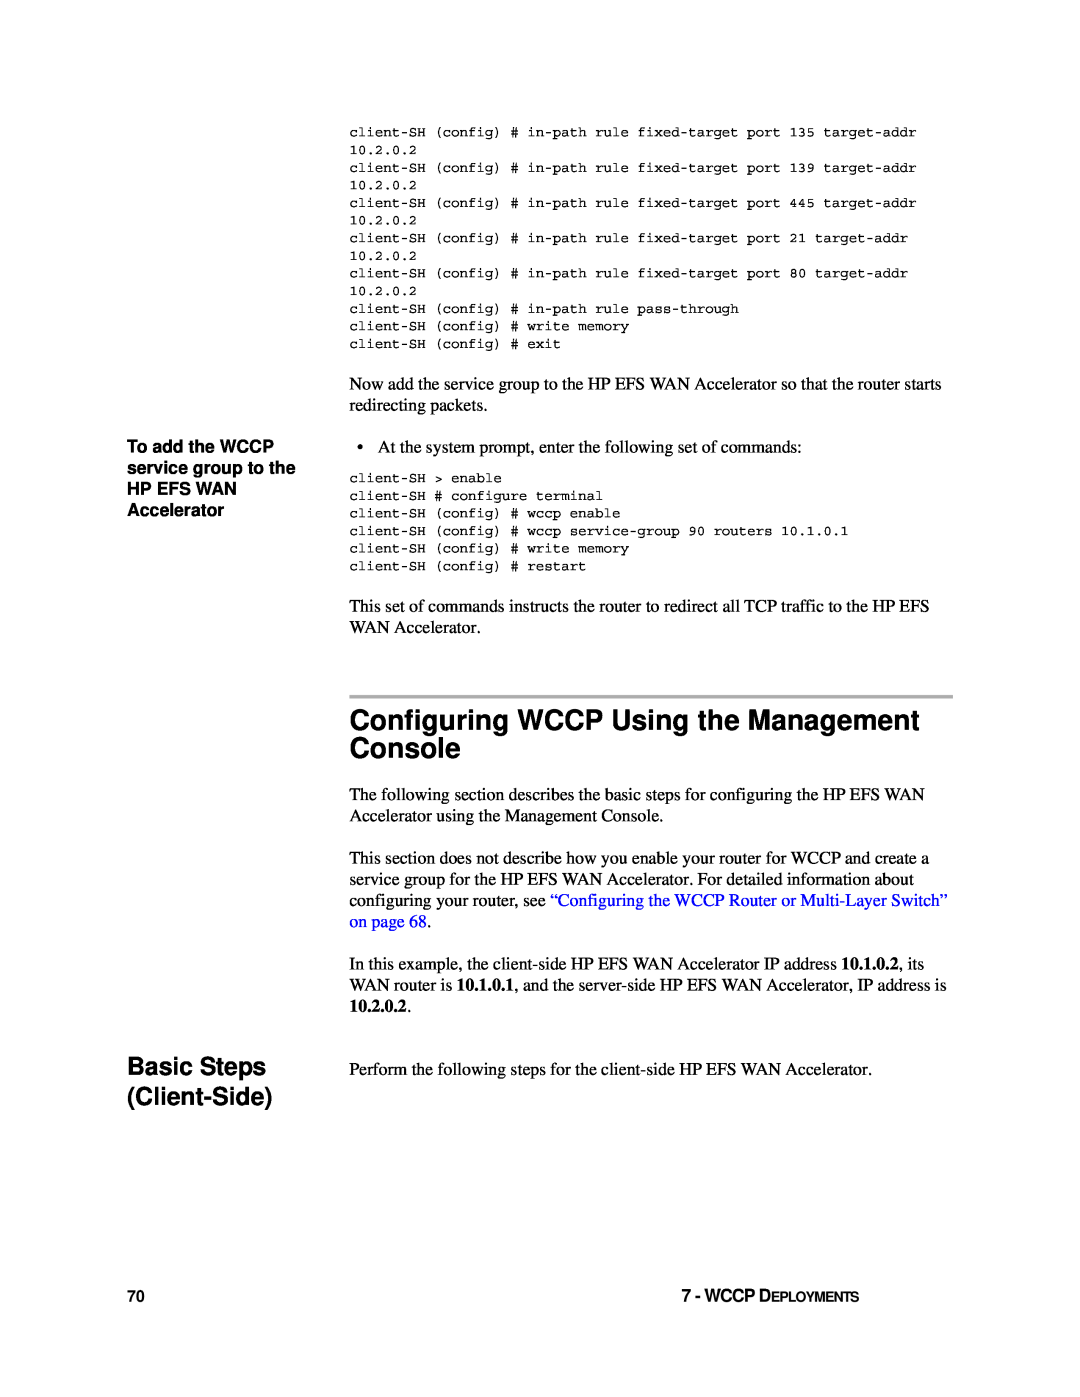 HP Enterprise File Services WAN Accelerator manual Configuring WCCP Using the Management Console, Basic Steps Client-Side 